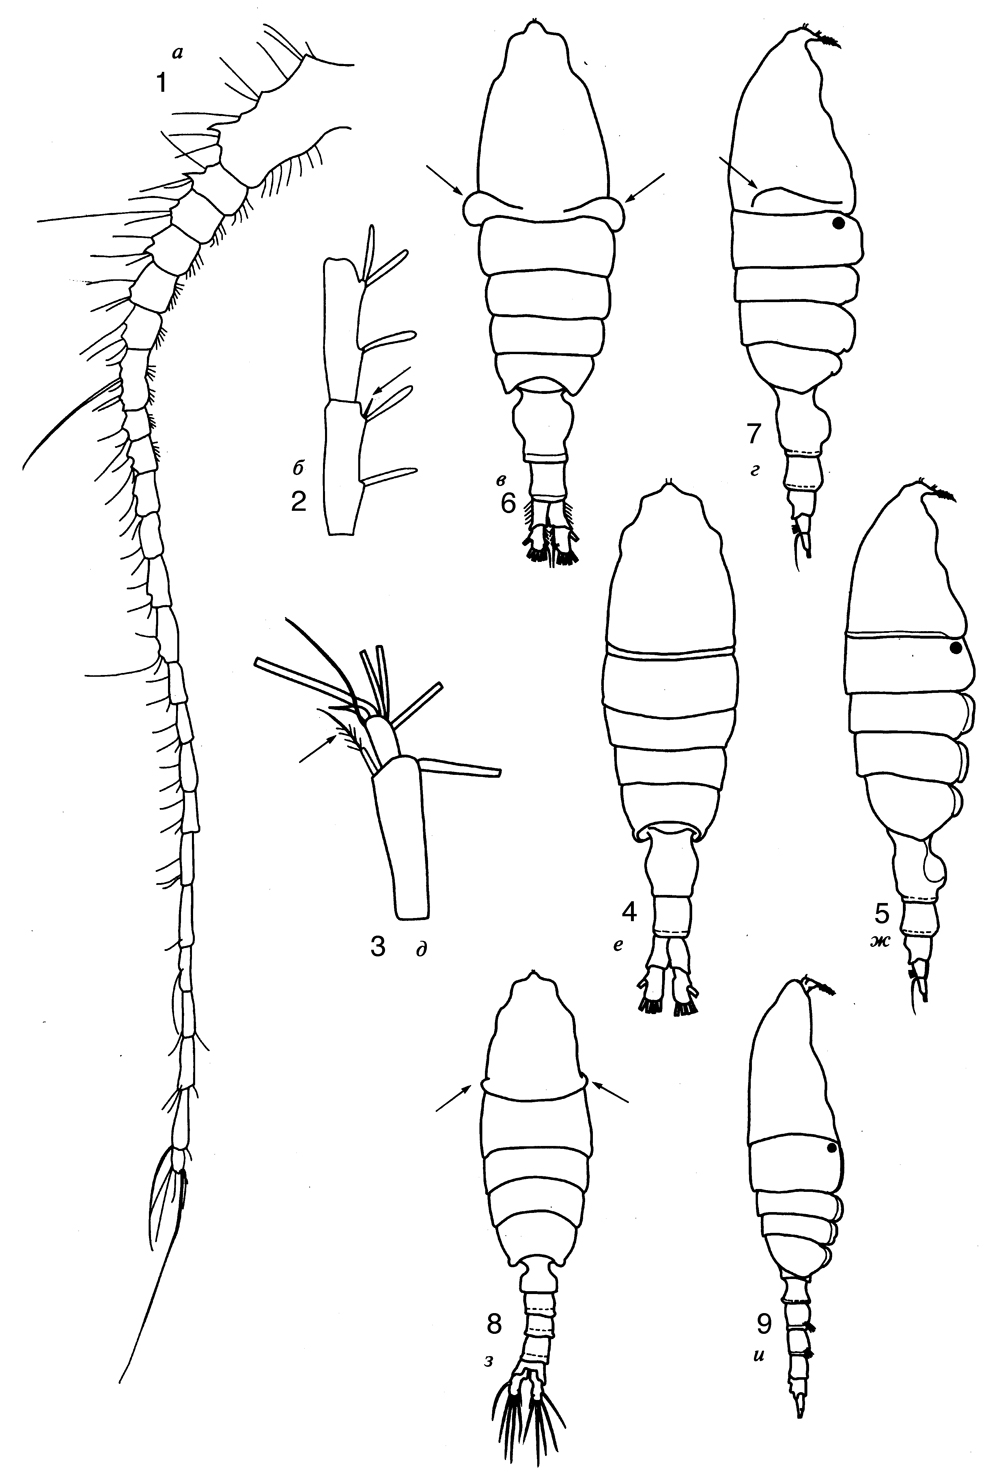 Species Pleuromamma scutullata - Plate 7 of morphological figures